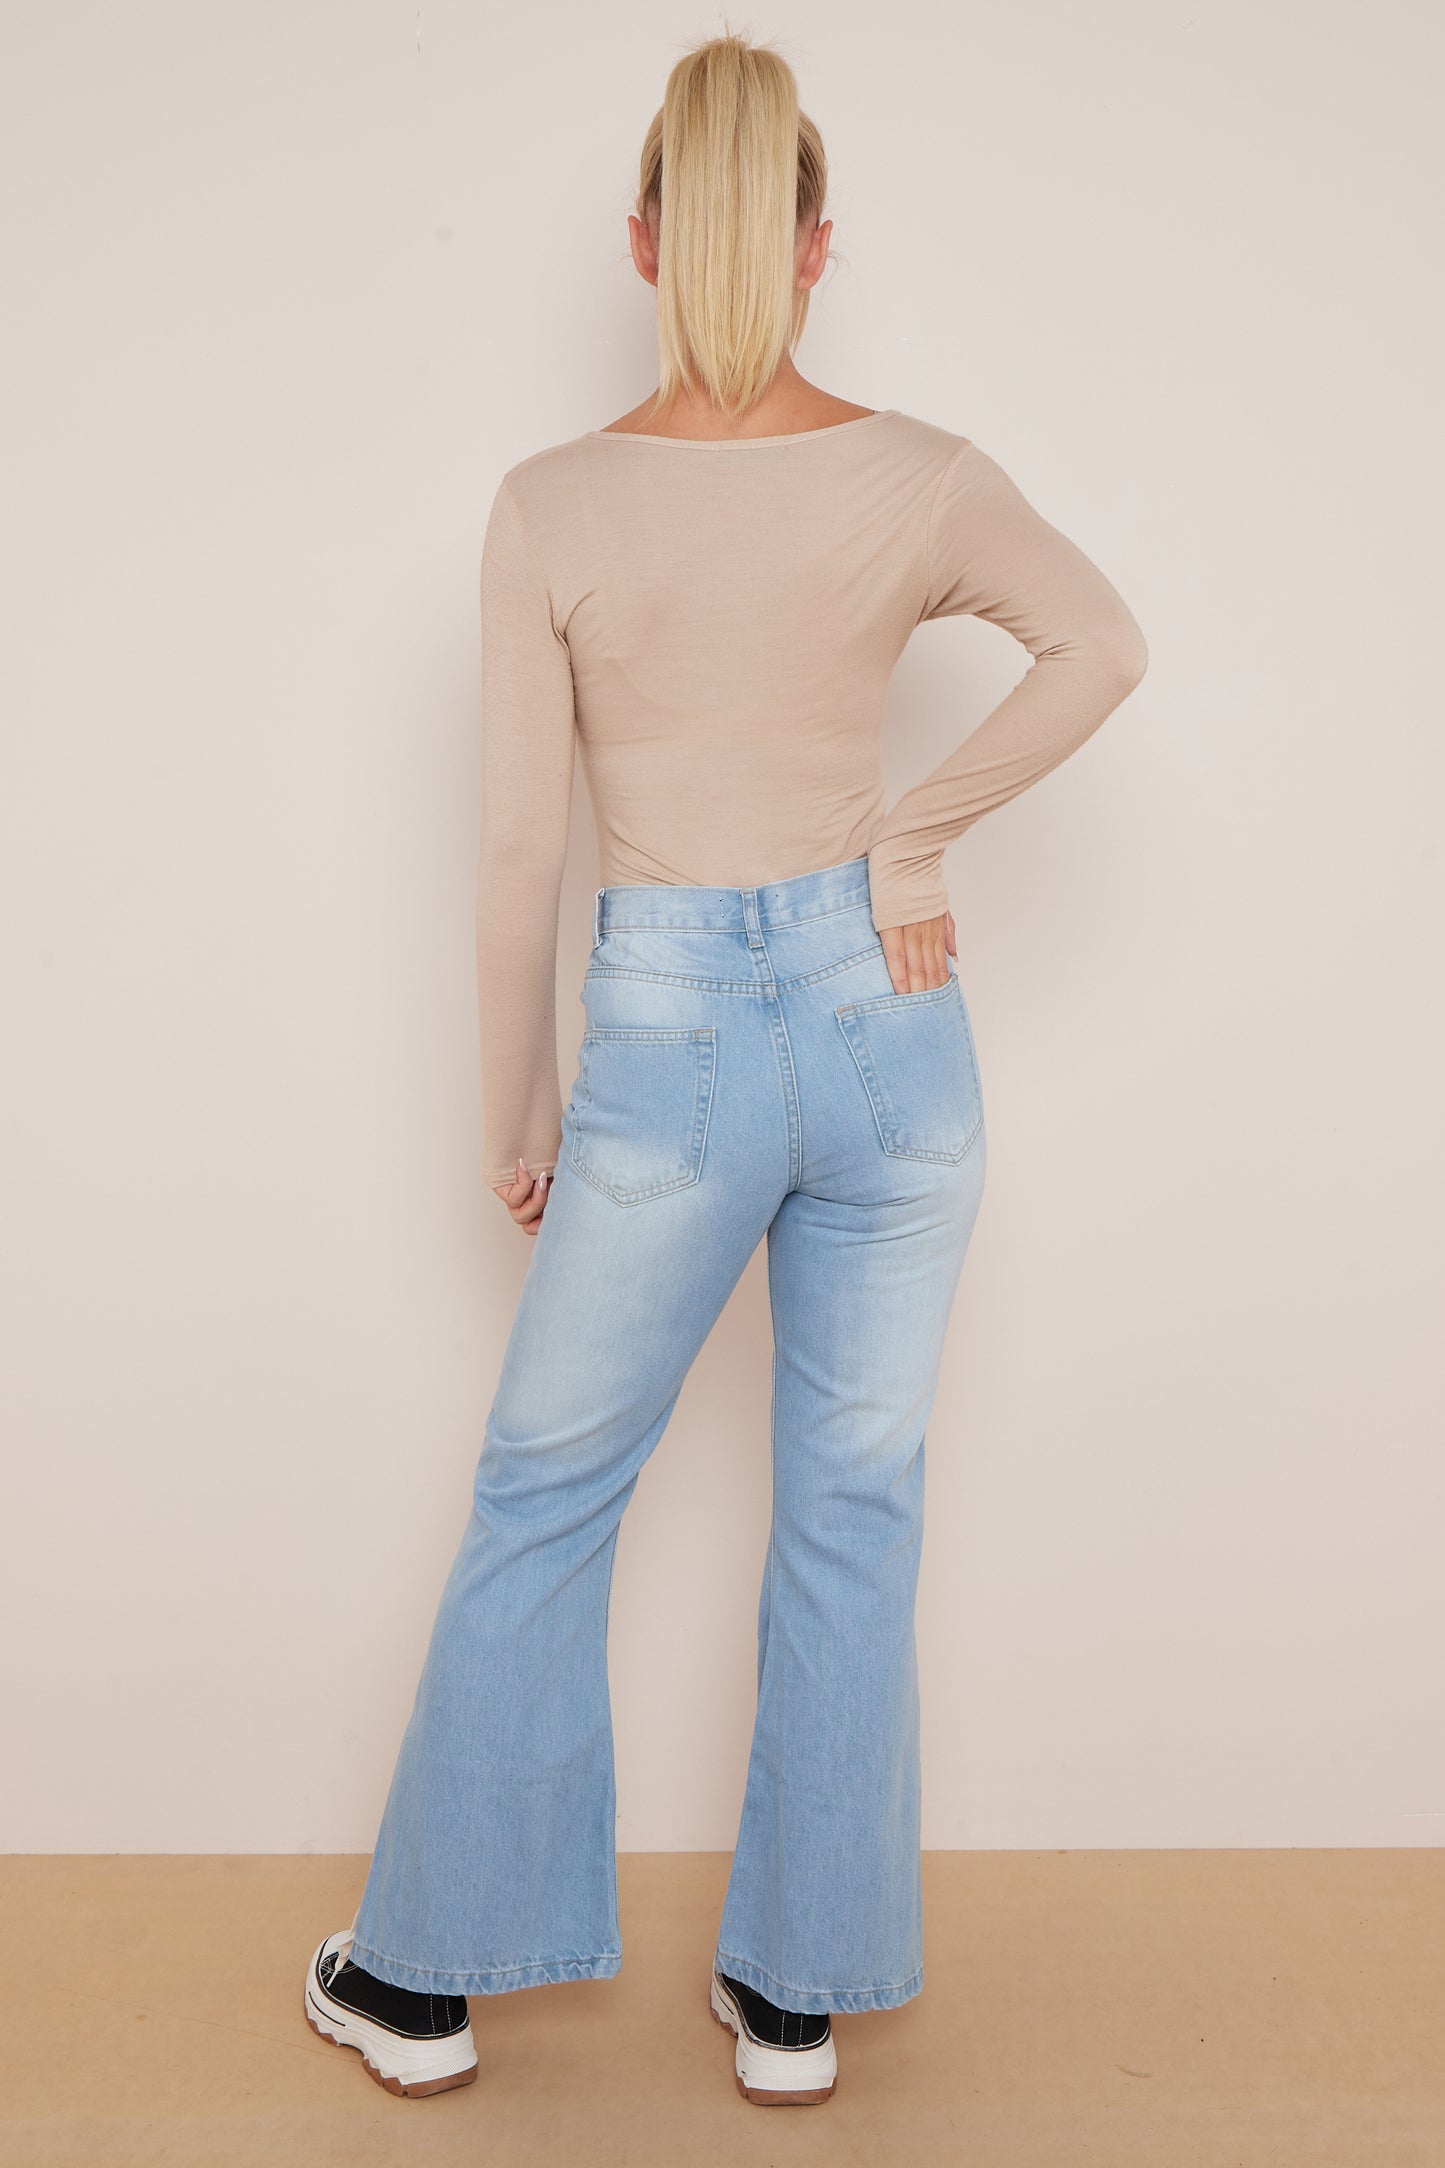 Classic Flare Cut Women's Jeans - Pack of 6 in Dark and Light Denim